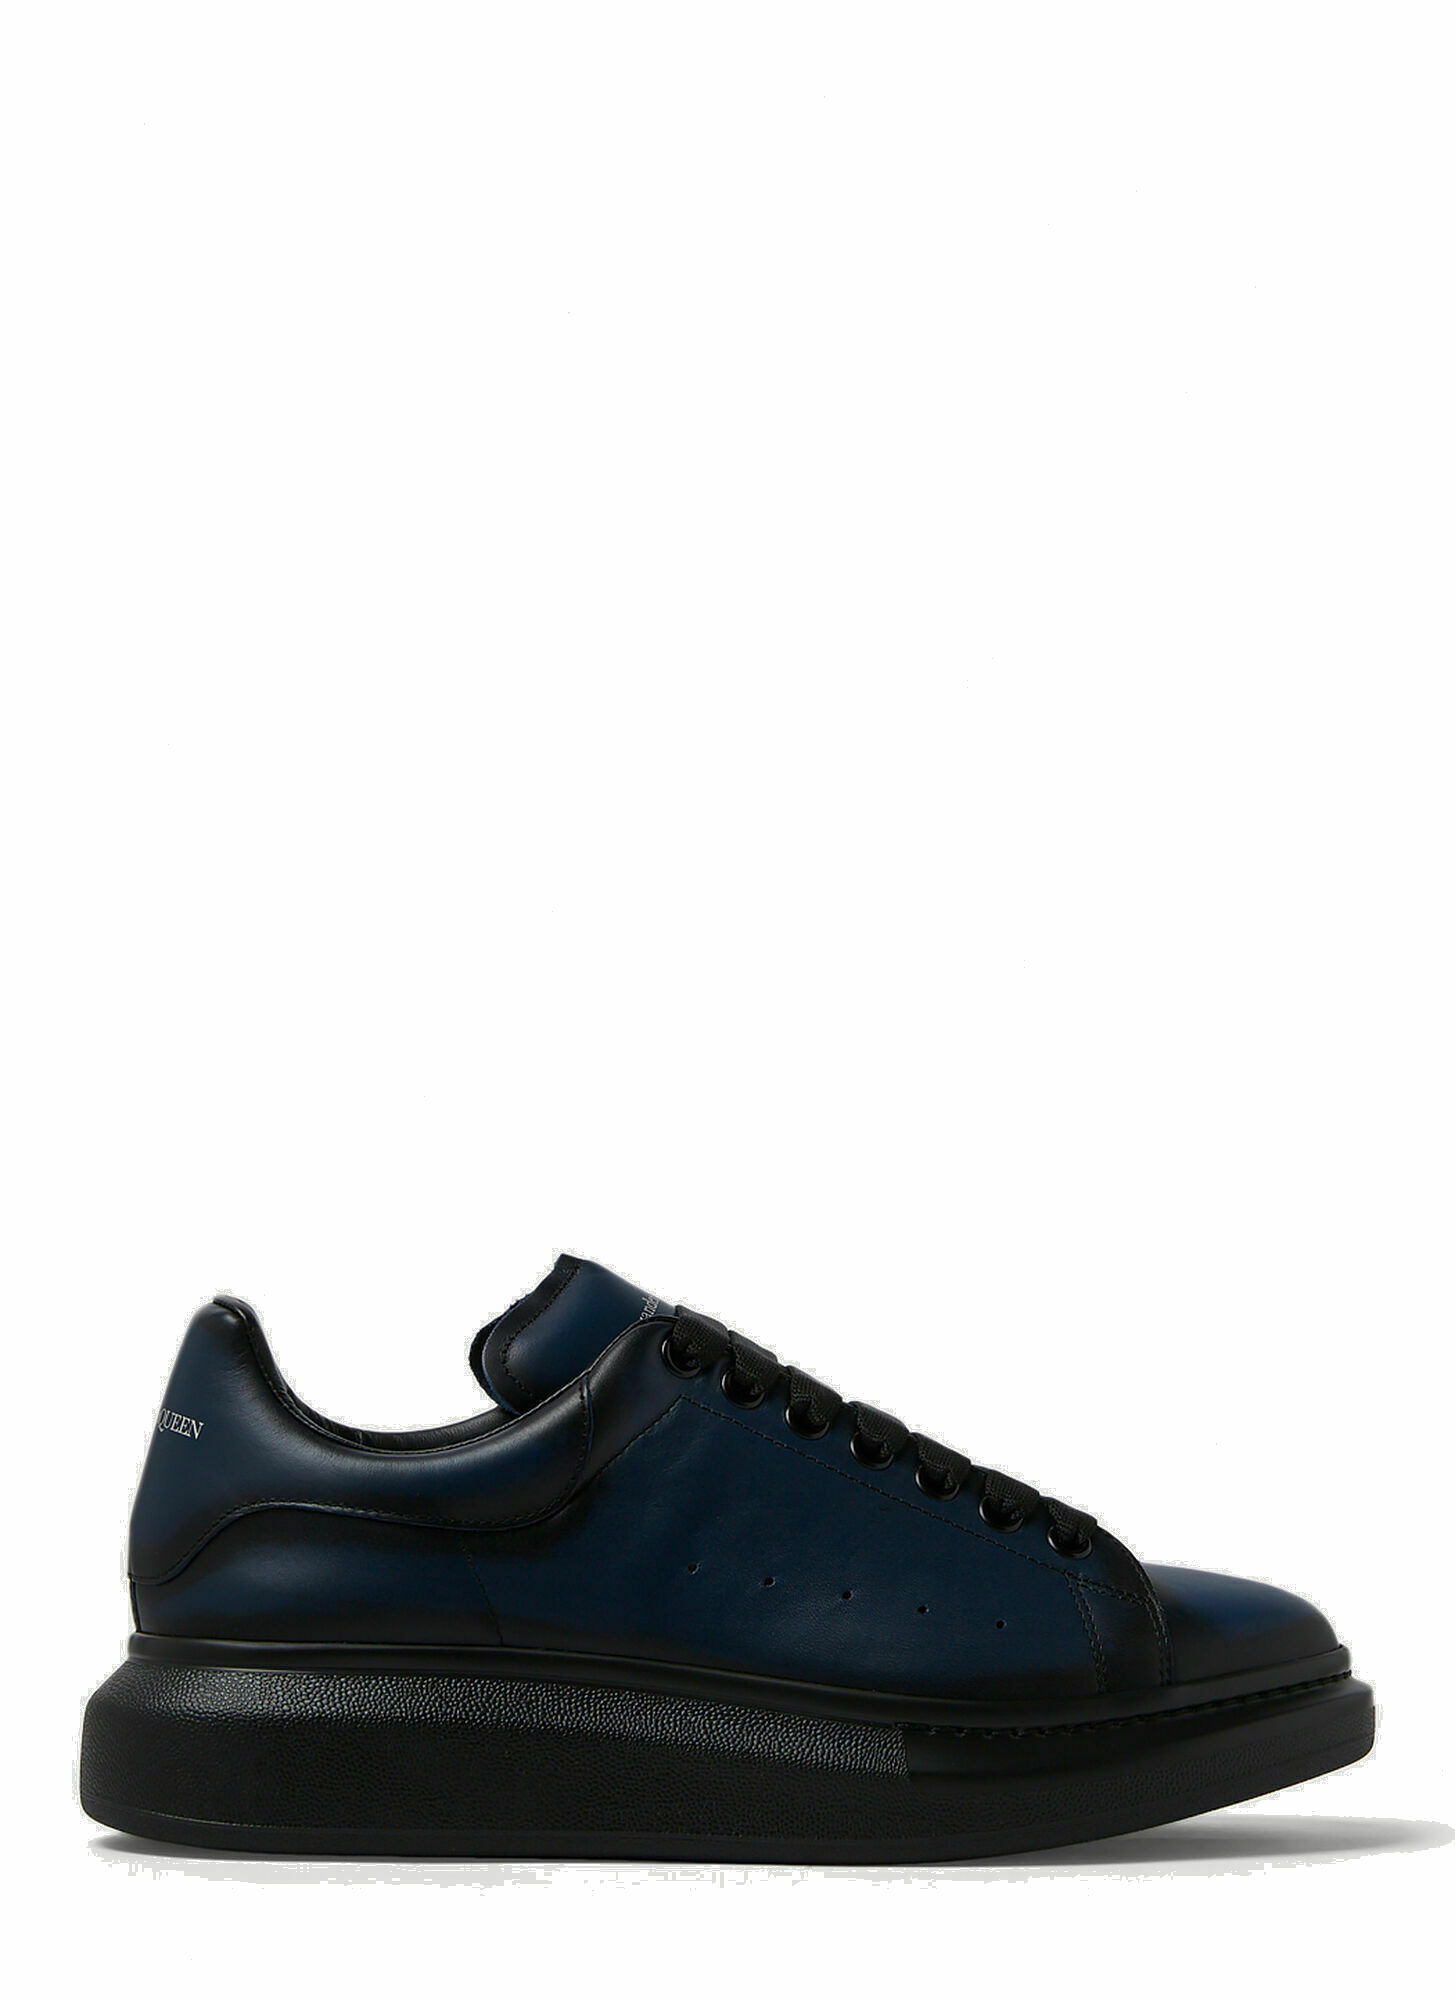 Photo: Larry Oversized Sneakers in Dark Blue